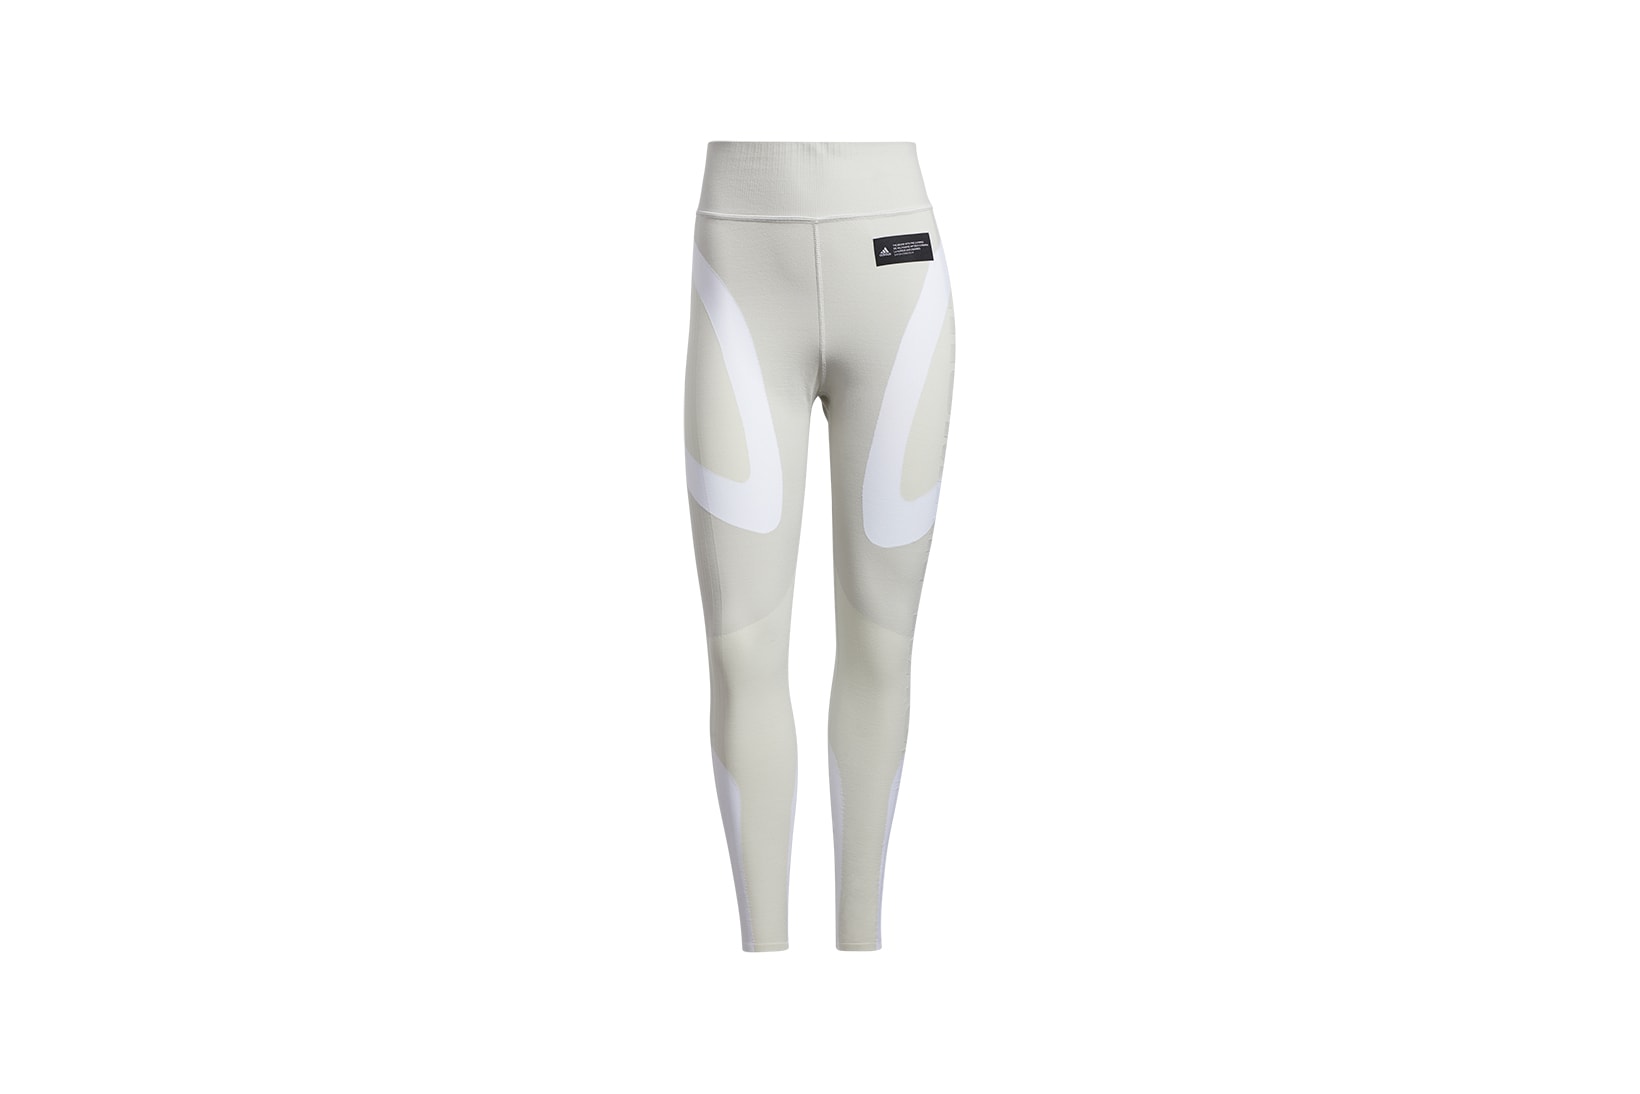 adidas pharrell williams pw primeknit fine collaboration activewear white leggings yoga pants